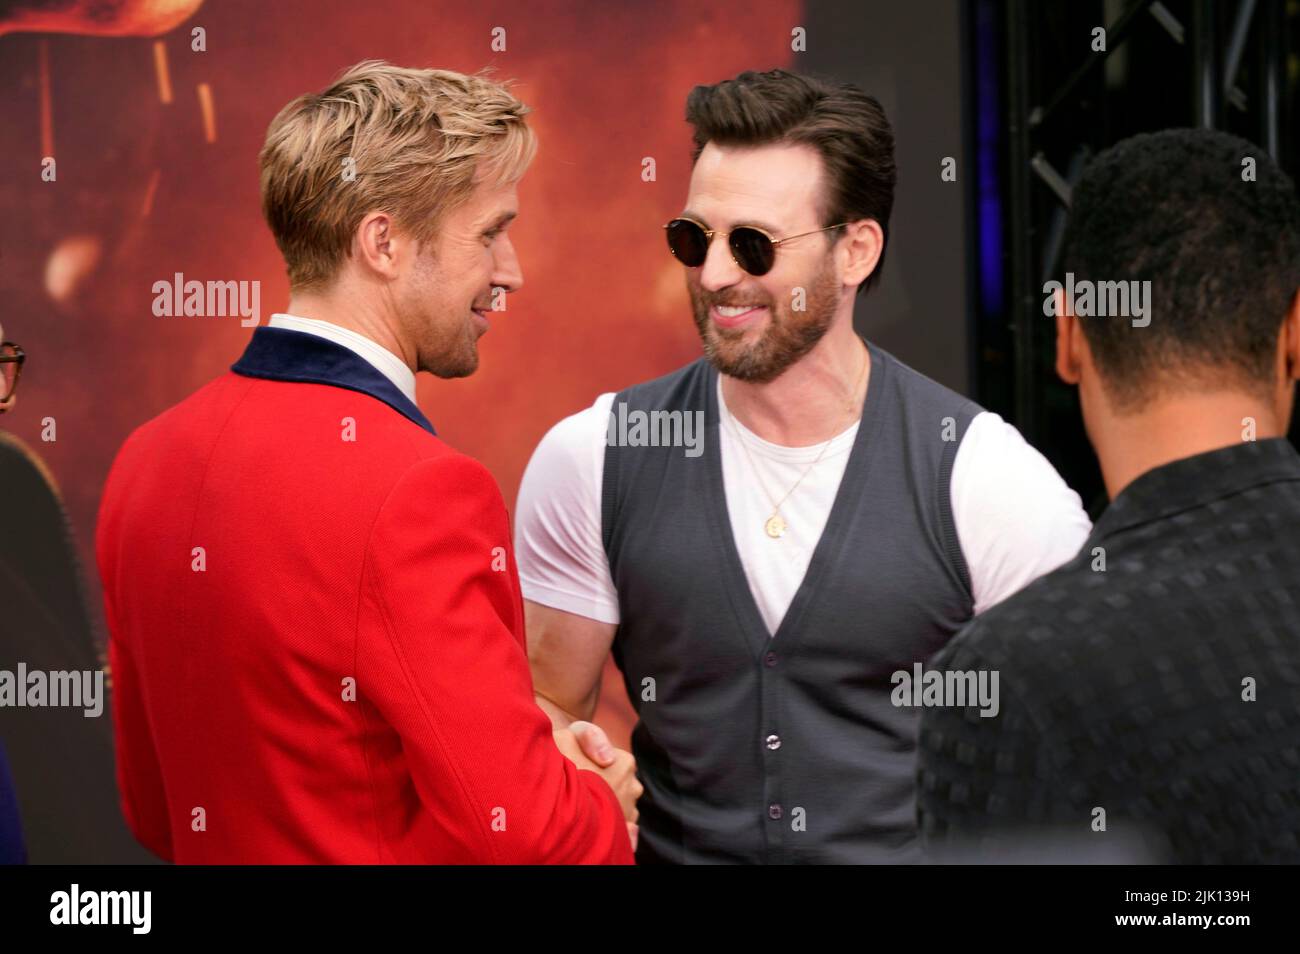 The Gray Man' 2 With Ryan Gosling Set at Netflix